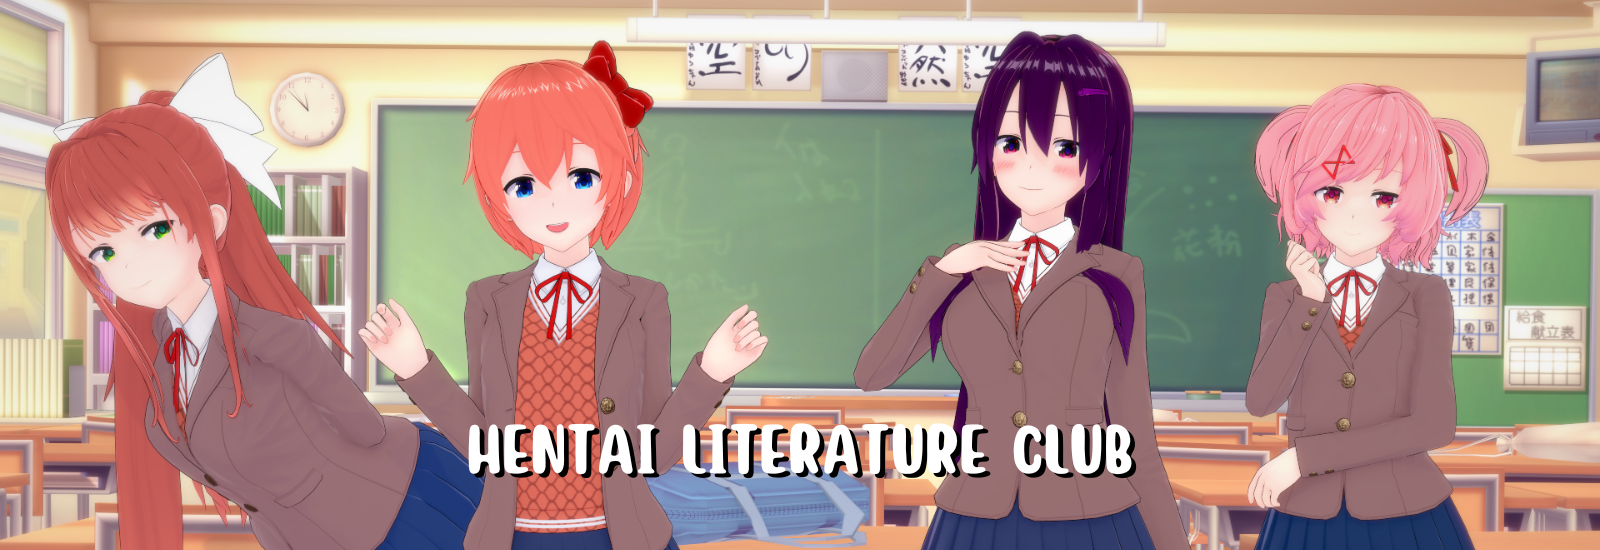 Hentai Literature Club